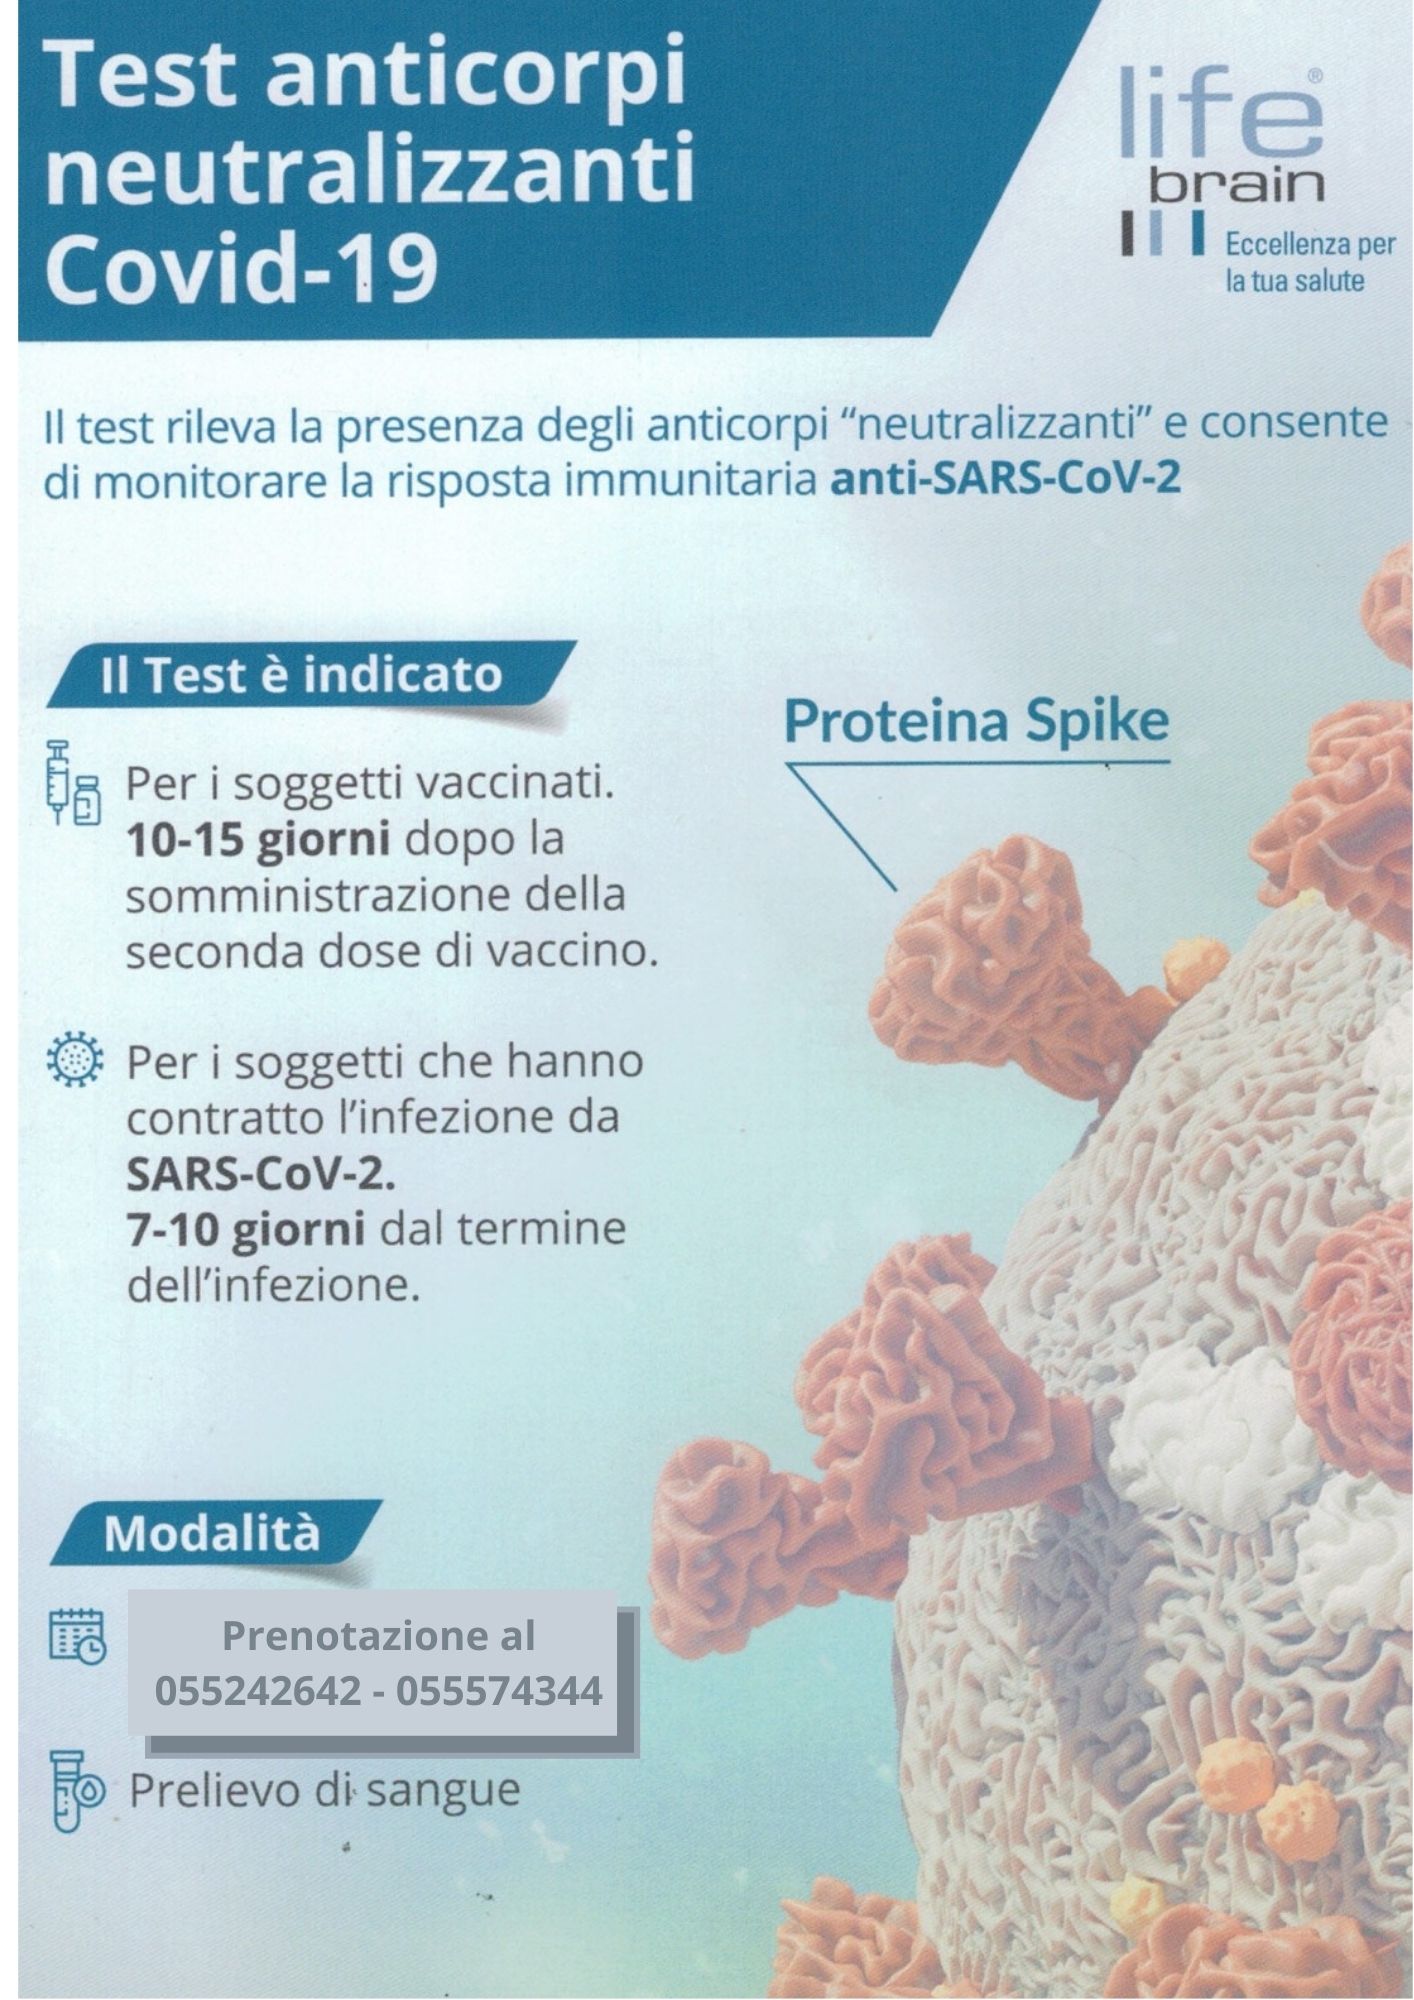 Test anticorpi